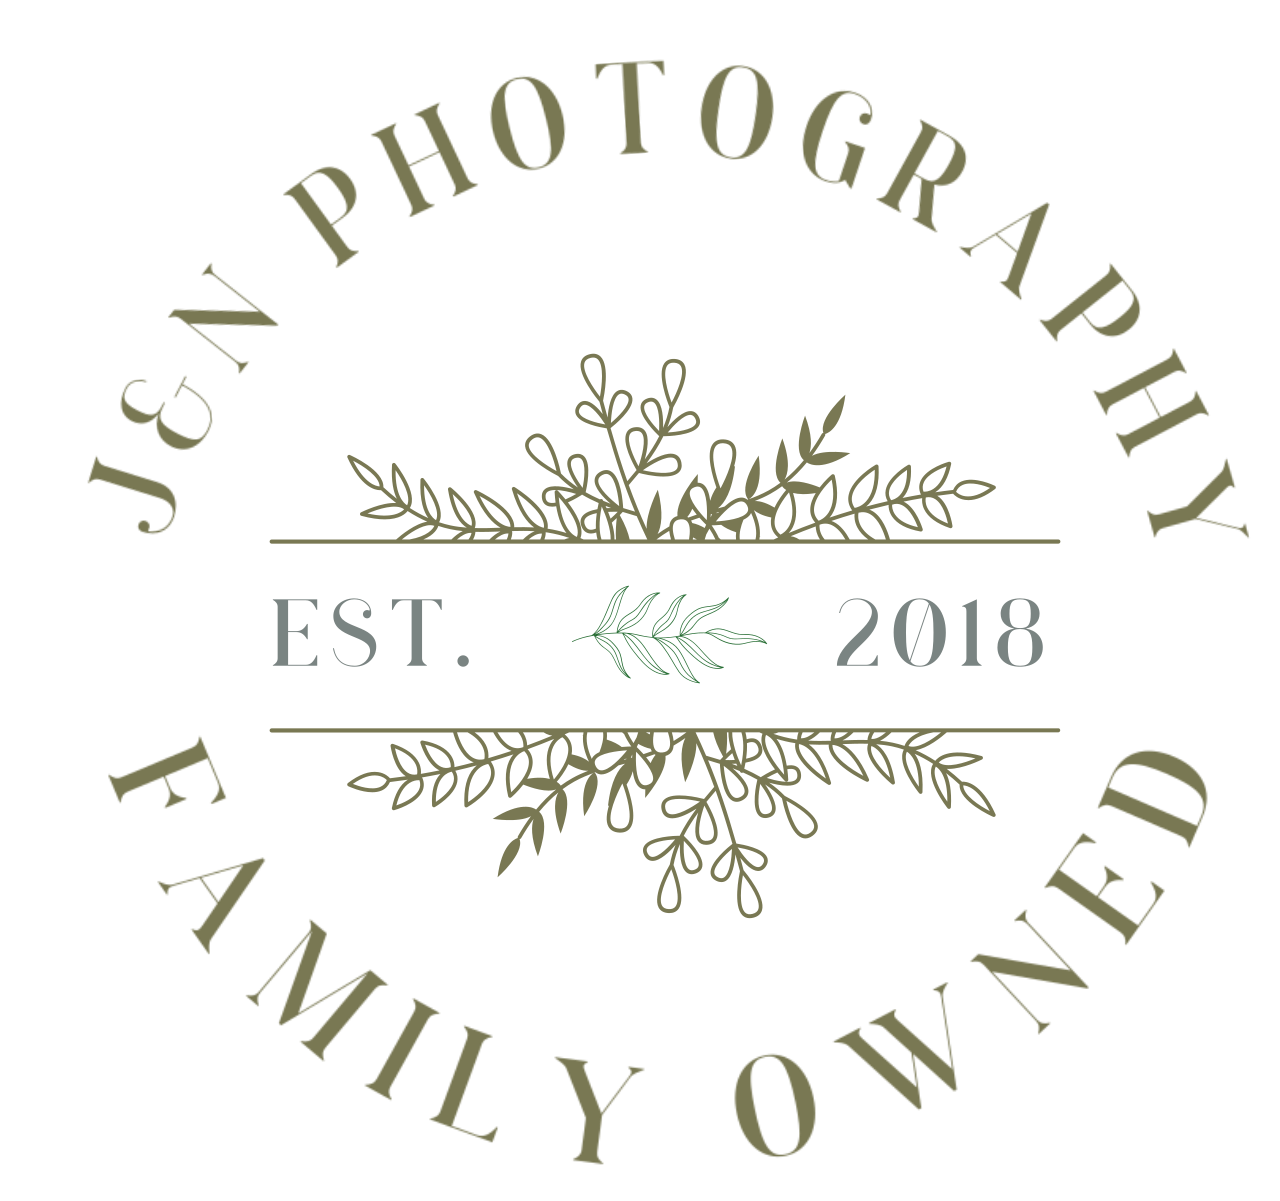    J&N PHOTOGRAPHY 's logo